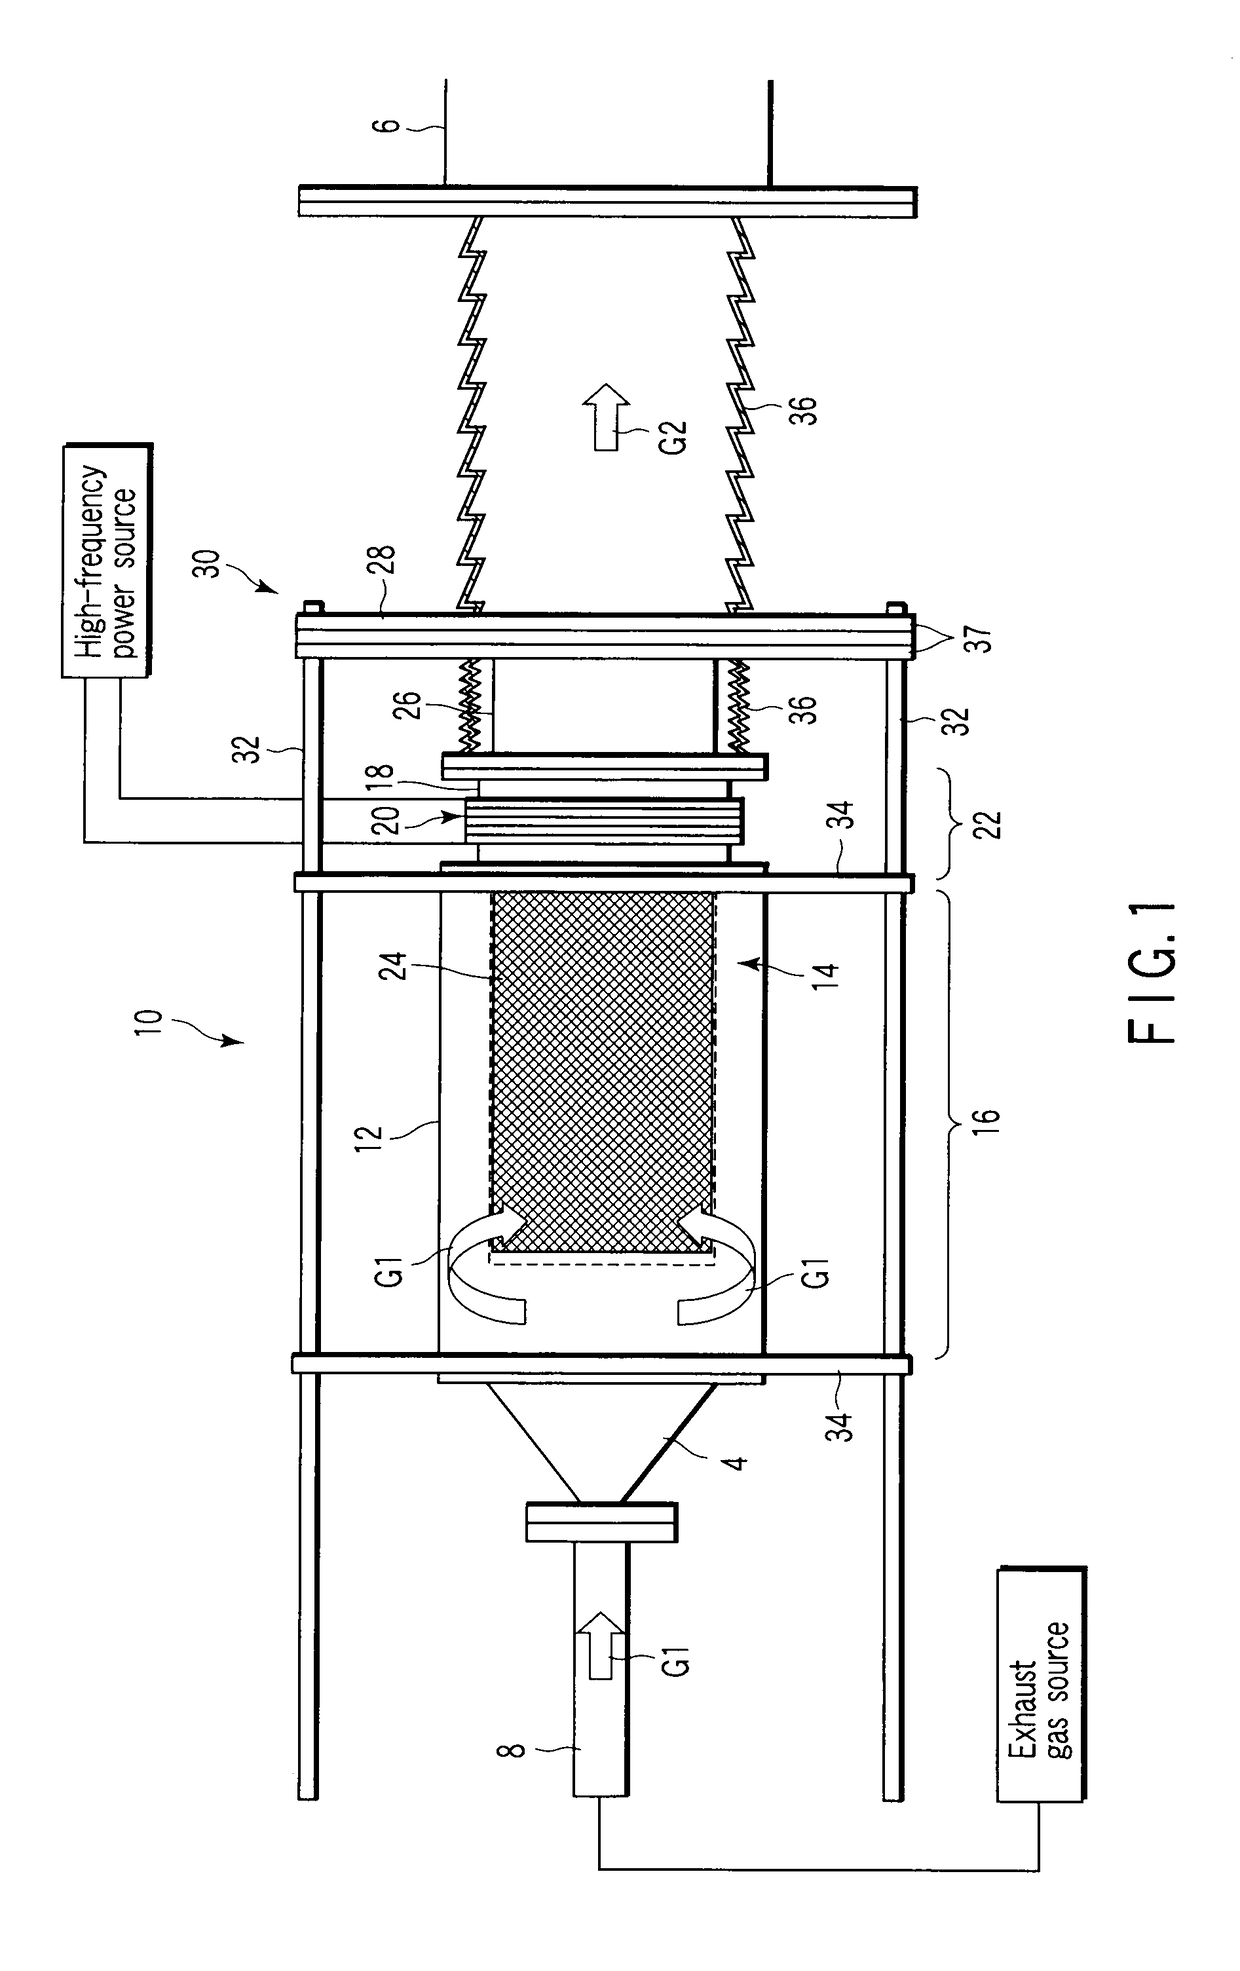 Exhaust gas purifier and filter regenerator